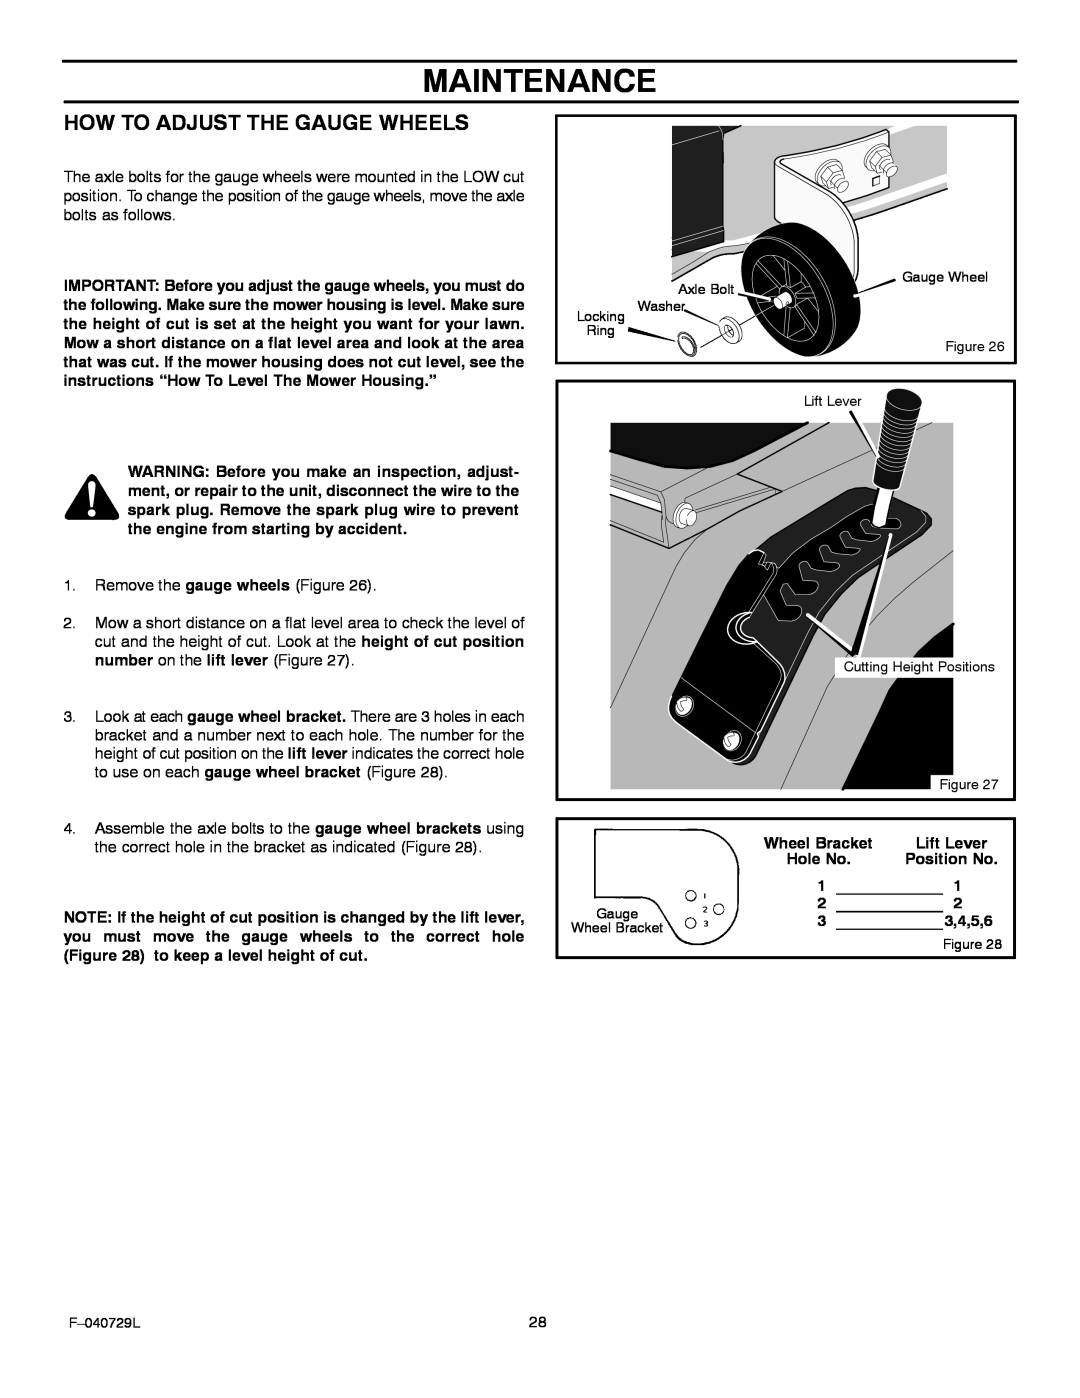 Murray 425620x92A manual Maintenance, How To Adjust The Gauge Wheels 